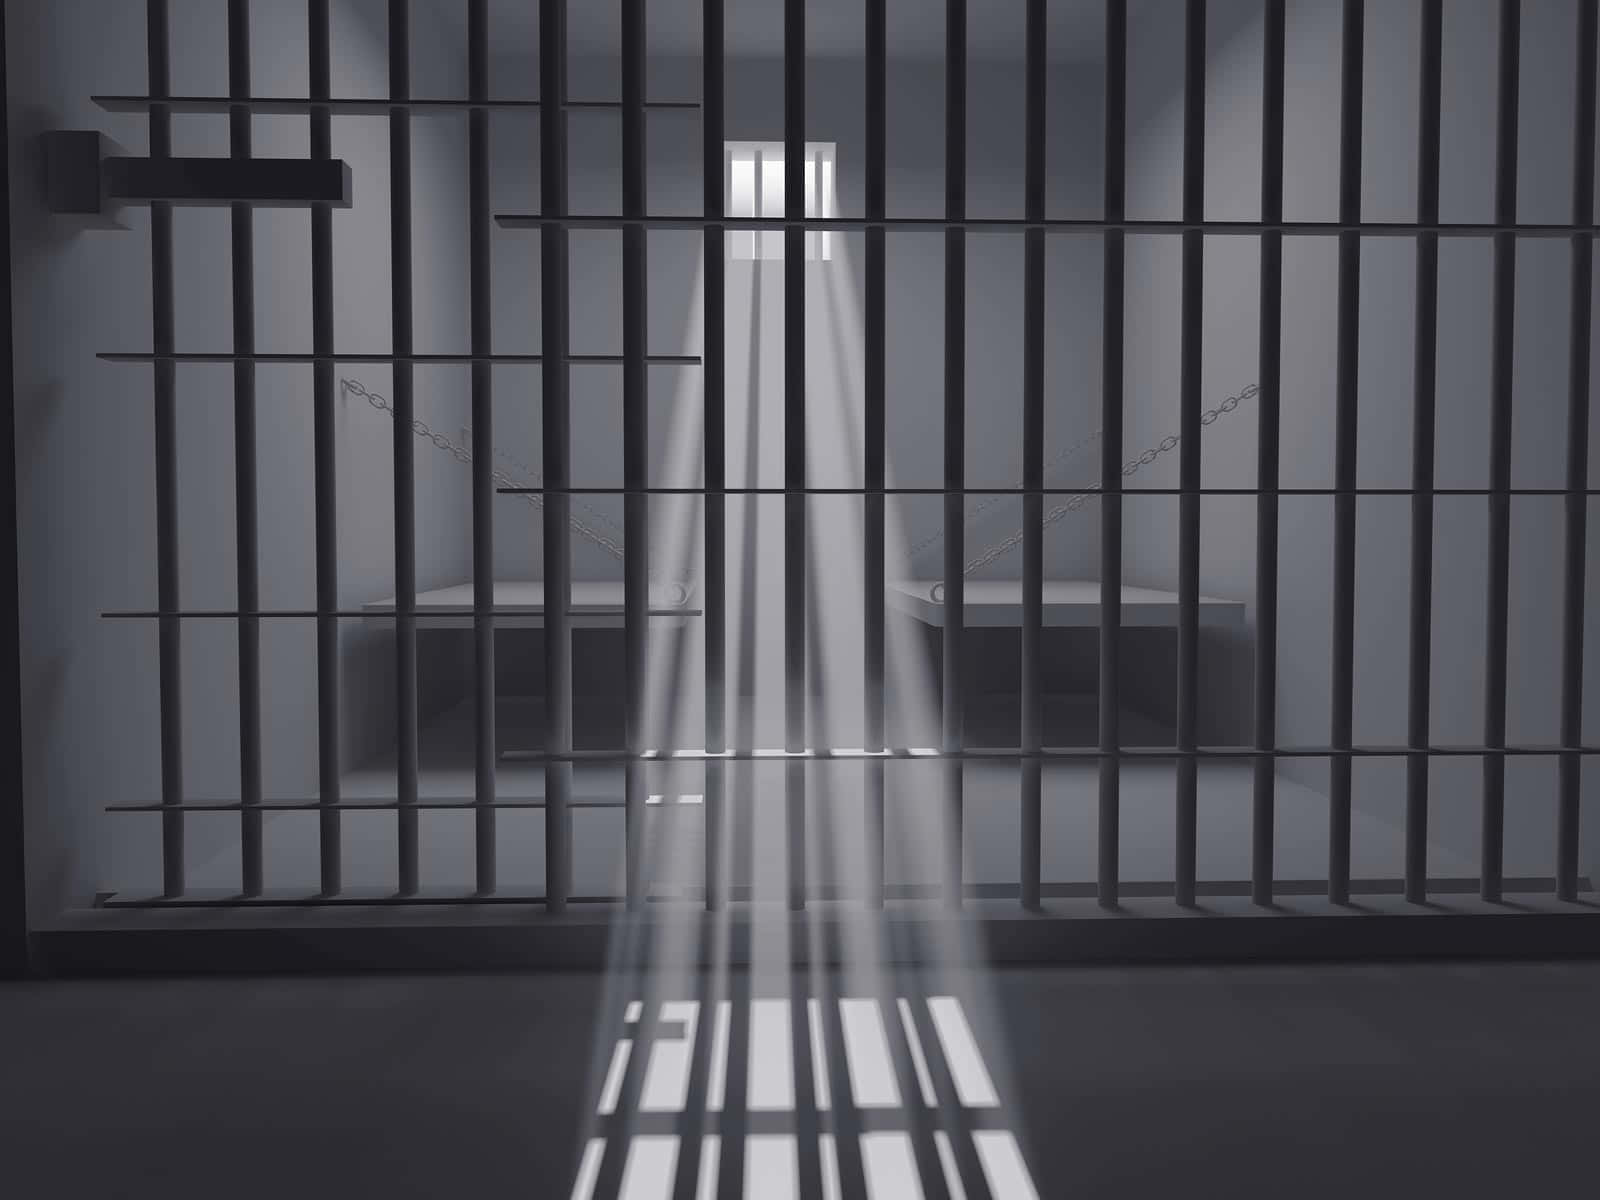 Prison Bars Wallpaper